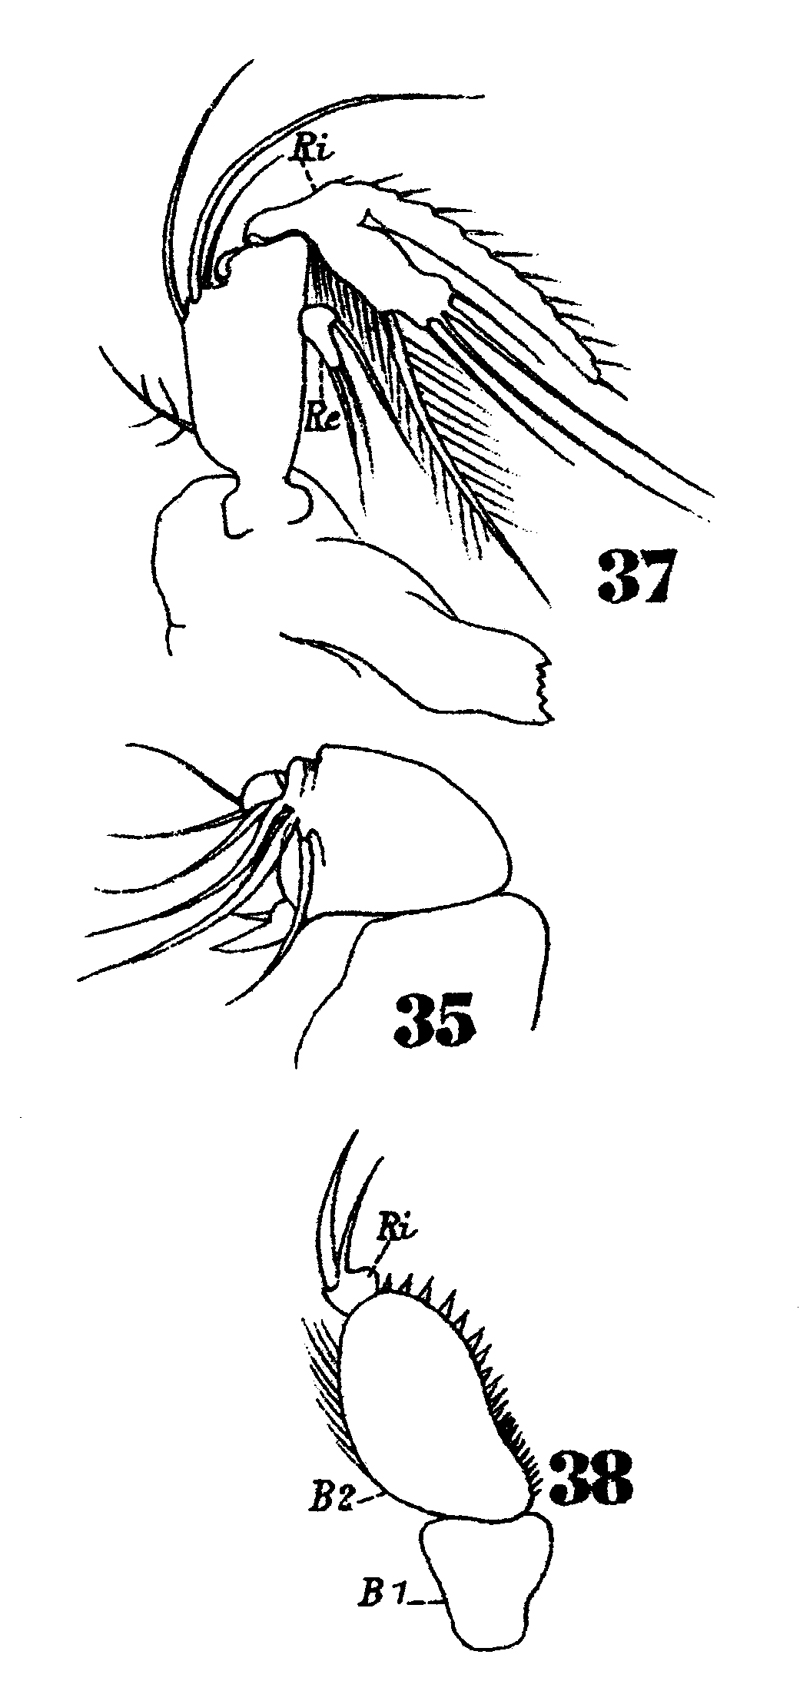 Espce Microsetella rosea - Planche 9 de figures morphologiques